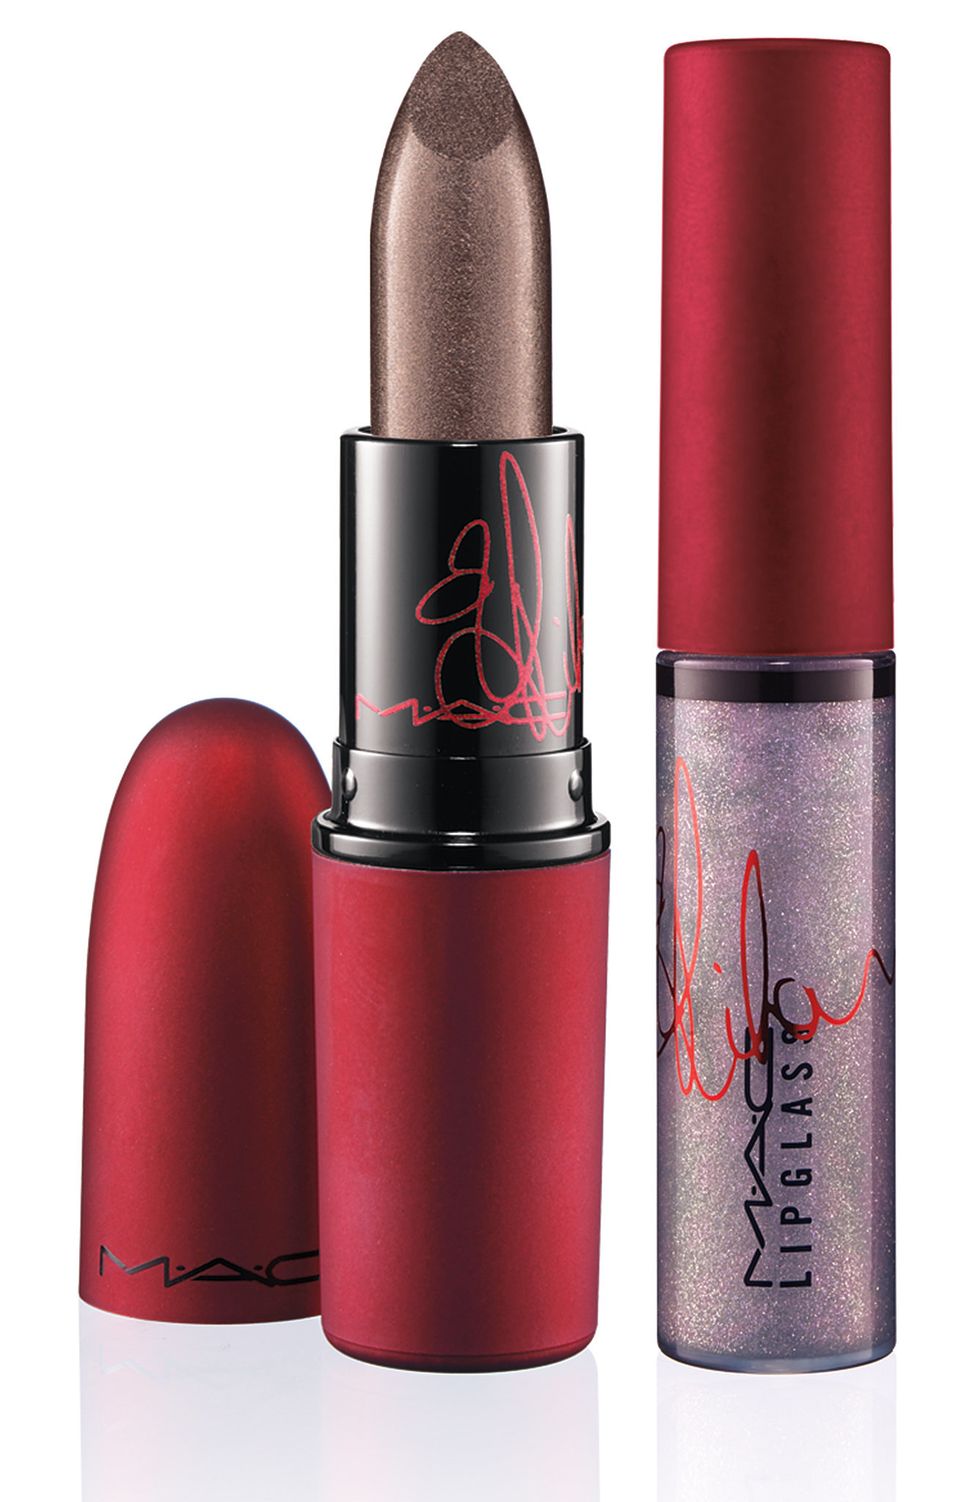 Rihanna MAC Viva Glam II Lipstick and Lipglass